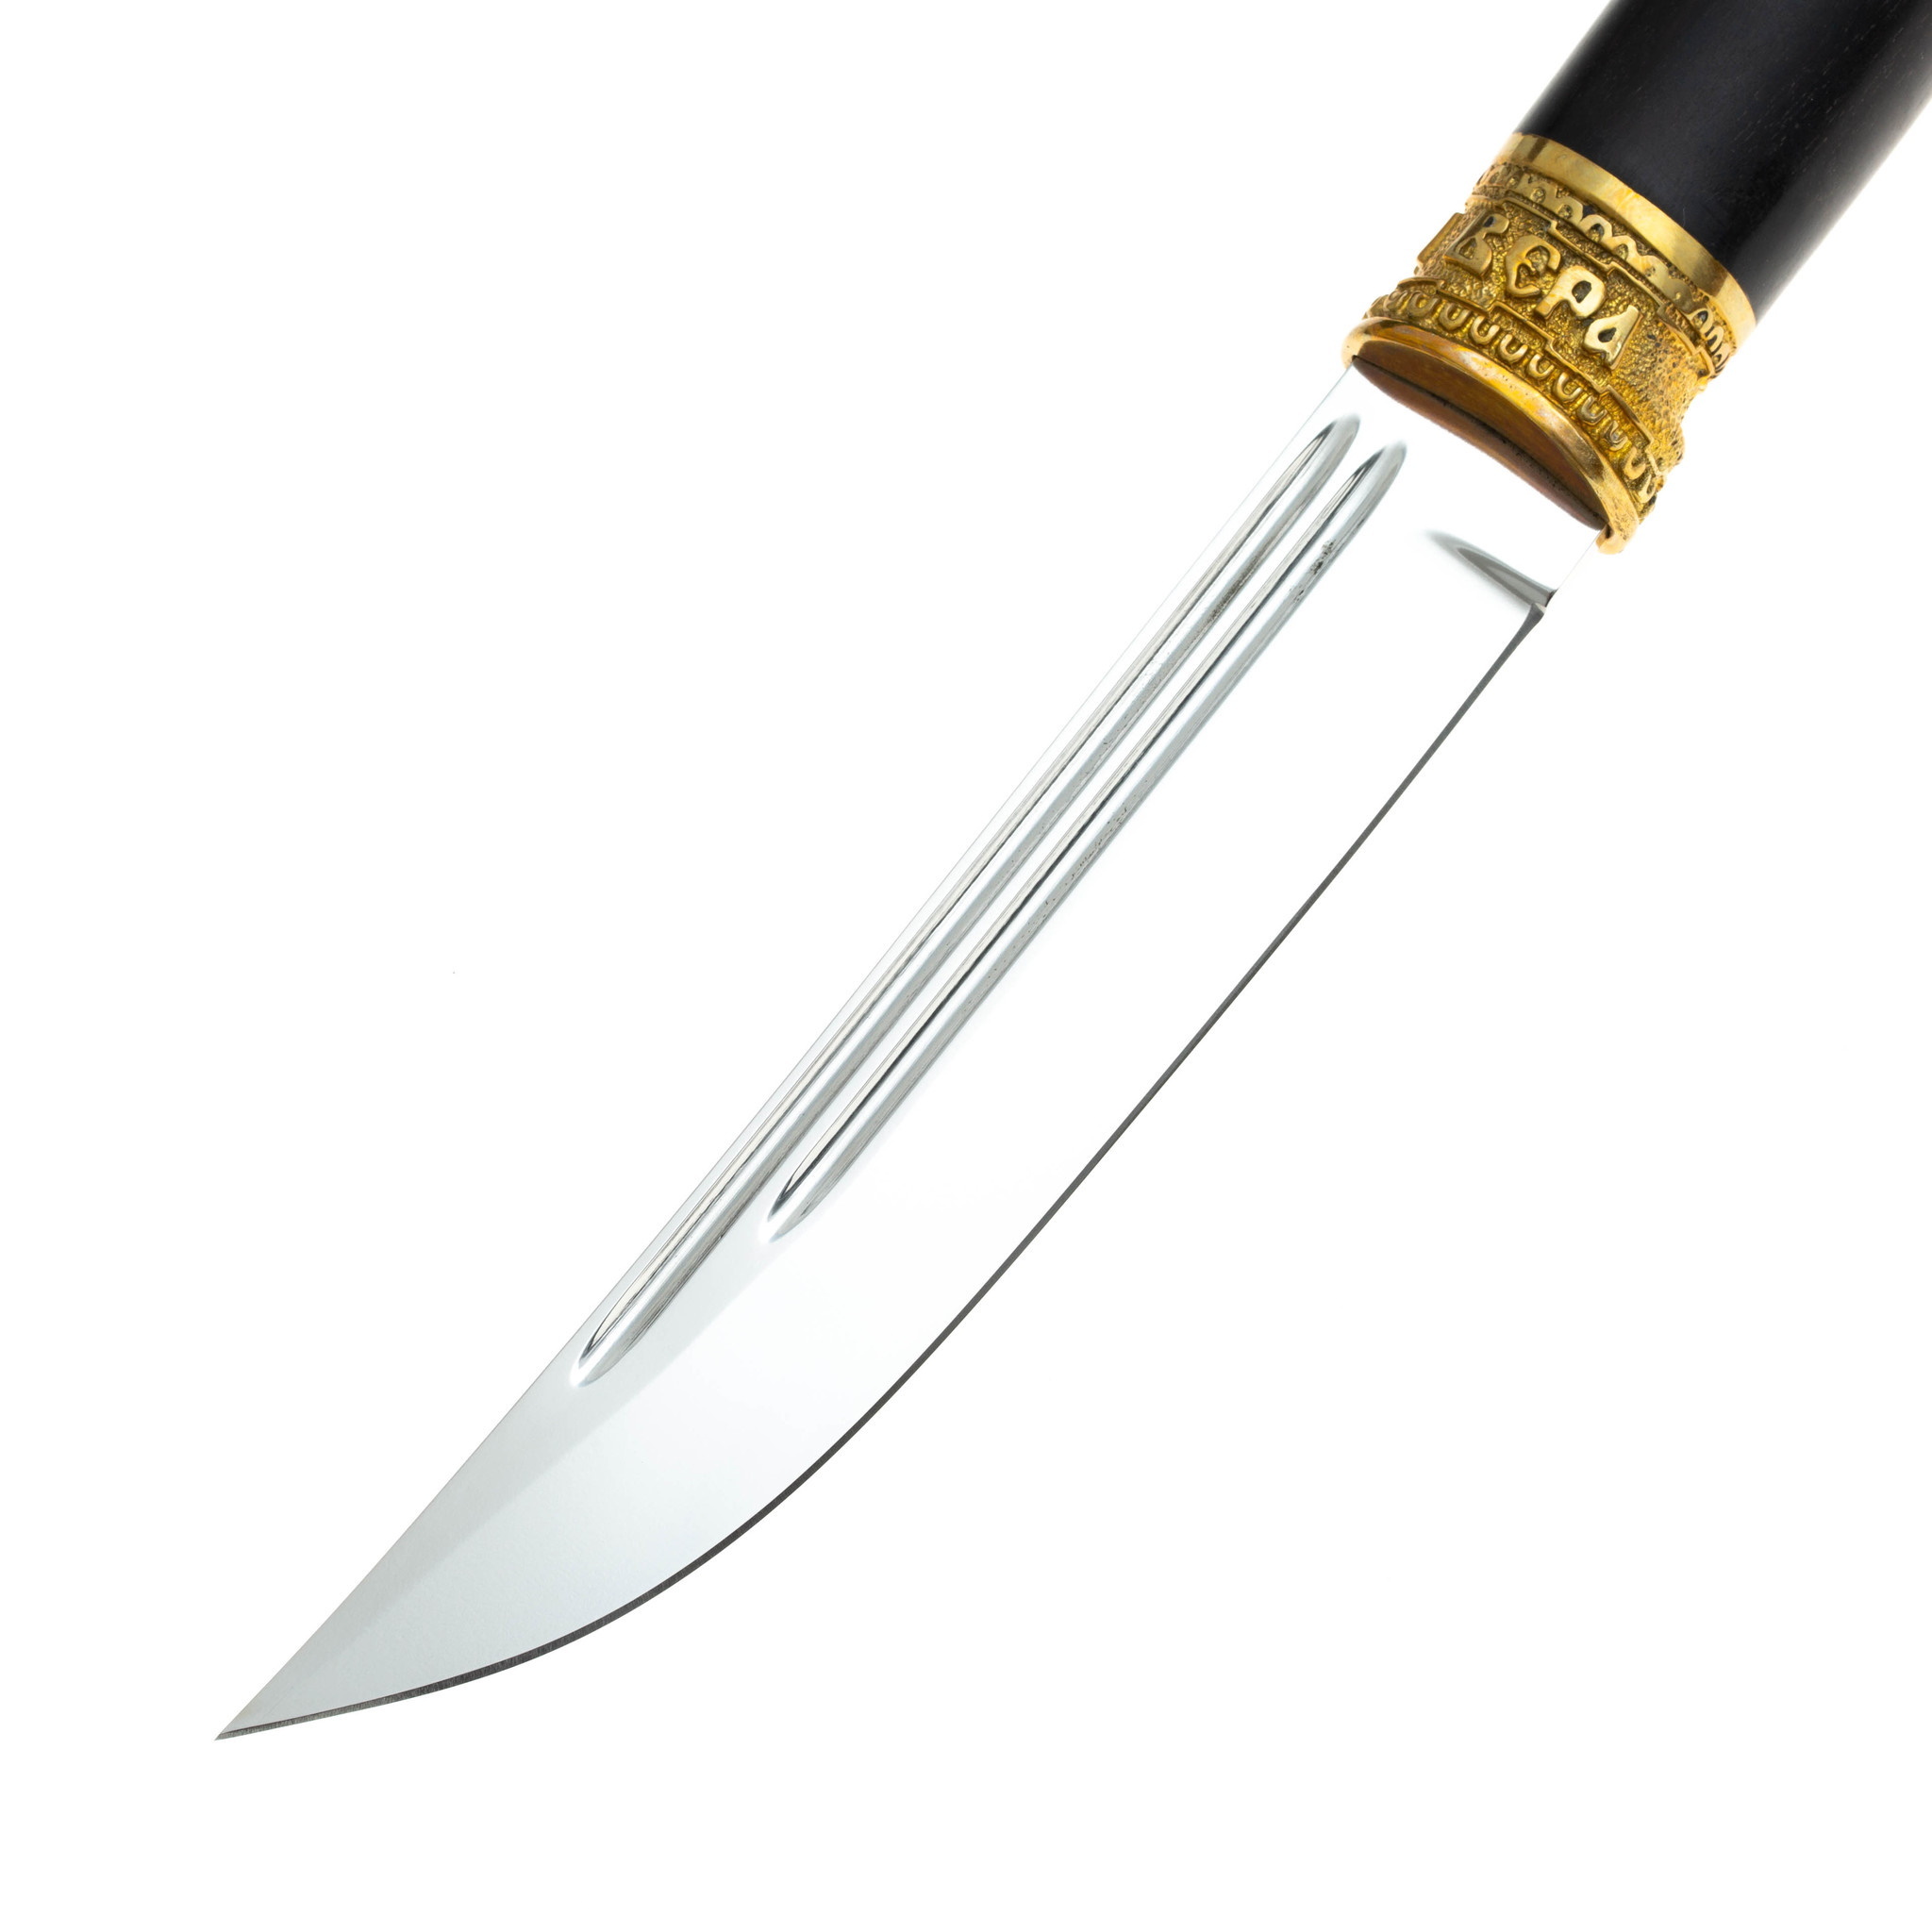 Нож Казацкий Засапожный, сталь 110х18, рукоять граб от Ножиков